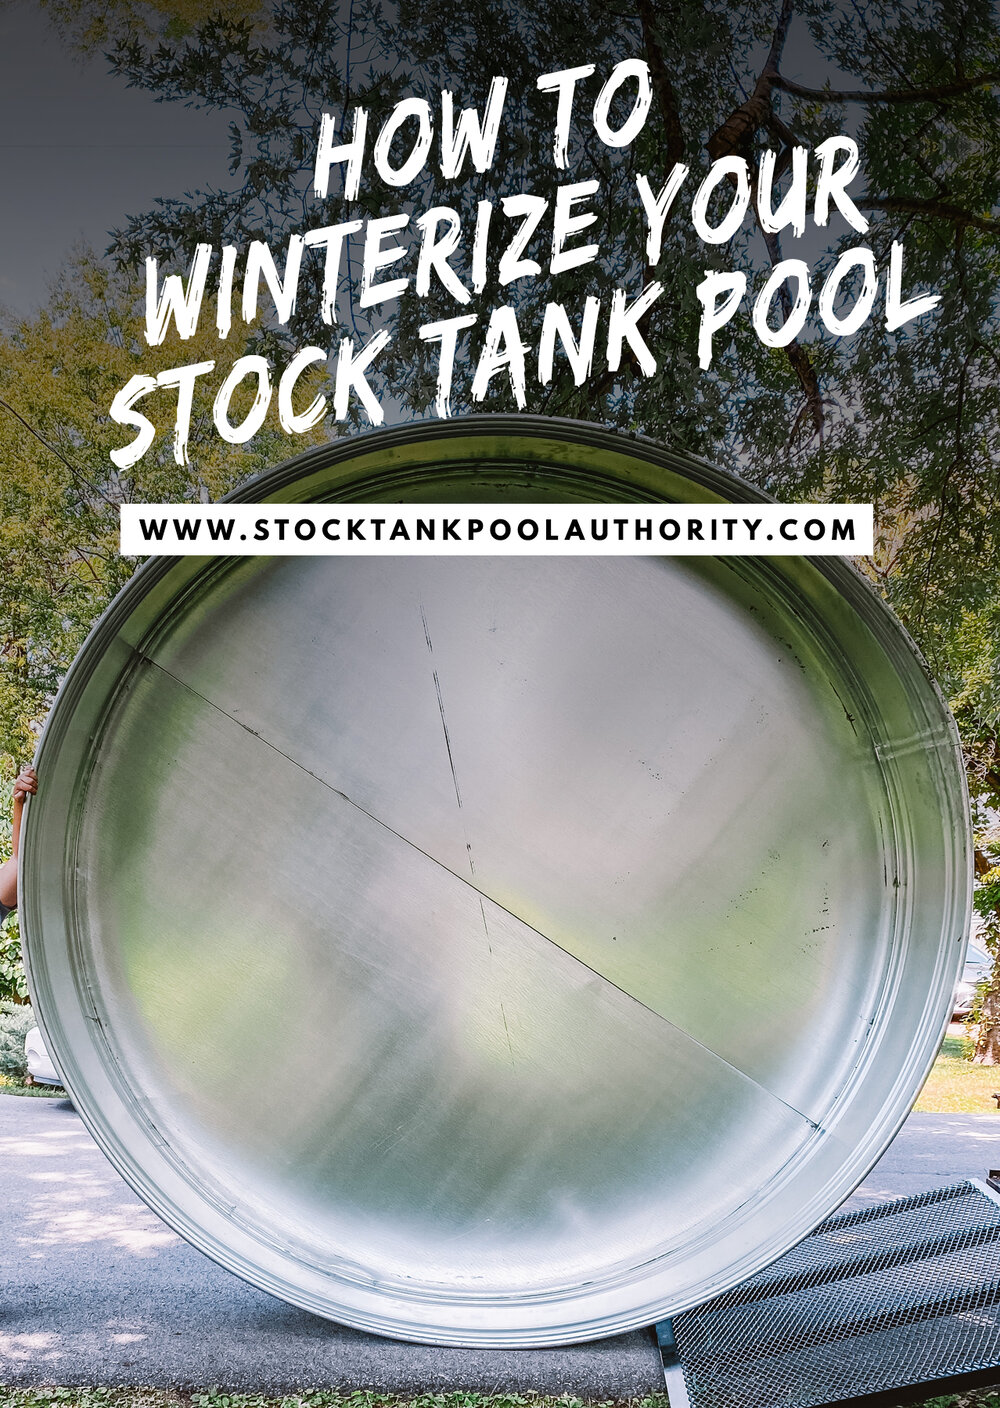 Stock Tank Pool Authority Winterize Tips 2.jpg